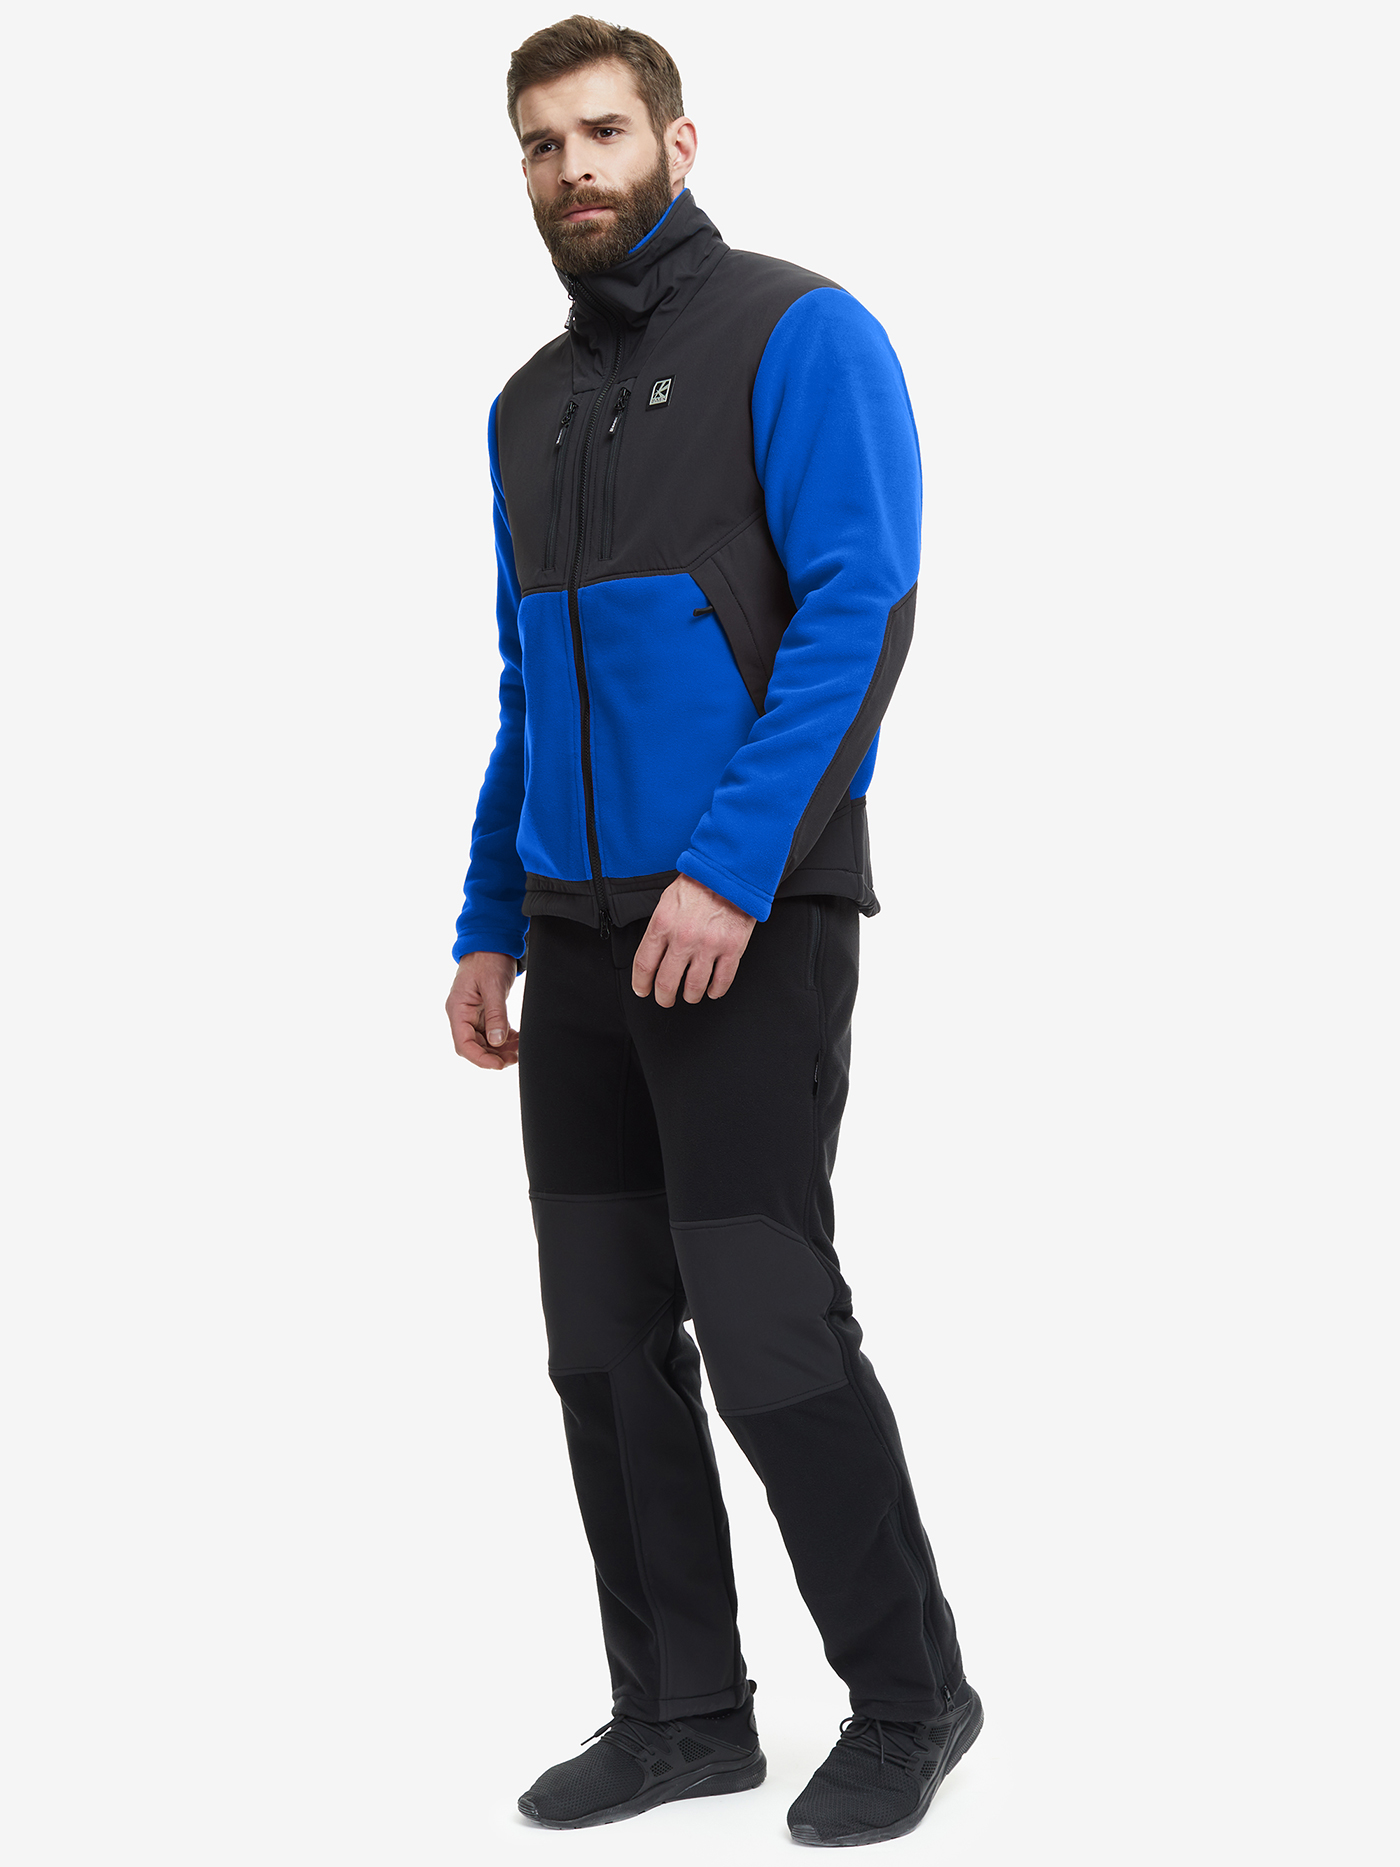 Куртка BASK, размер 48, цвет синий 2262-9305-048 Guide - фото 1